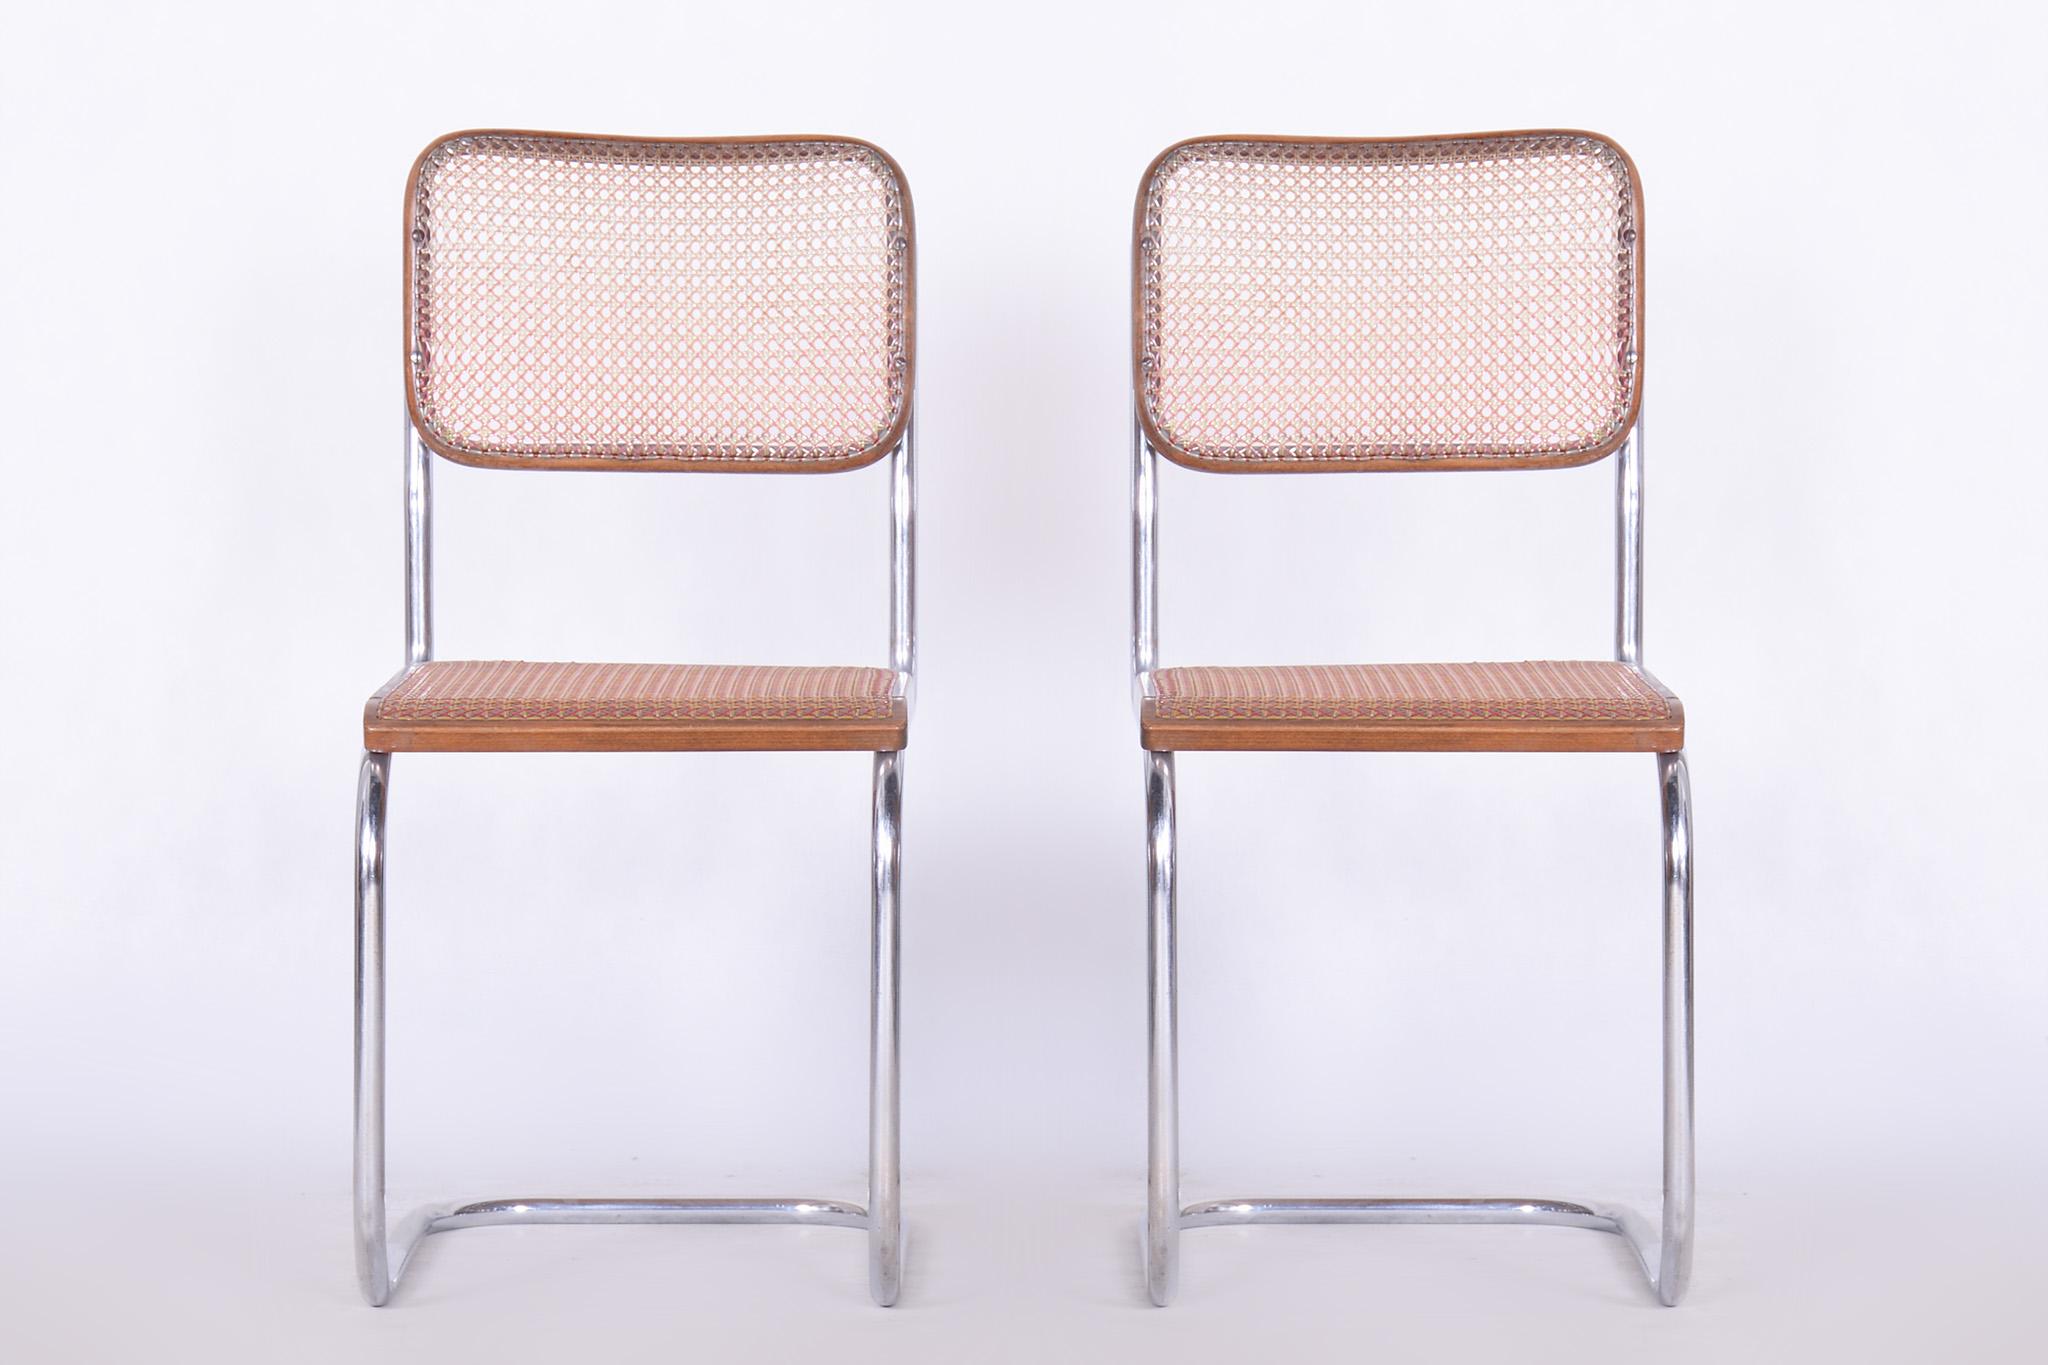 Restored Bauhaus Pair of Chairs, Robert Slezak, Chrome, Beech, Czechia, 1930s For Sale 3